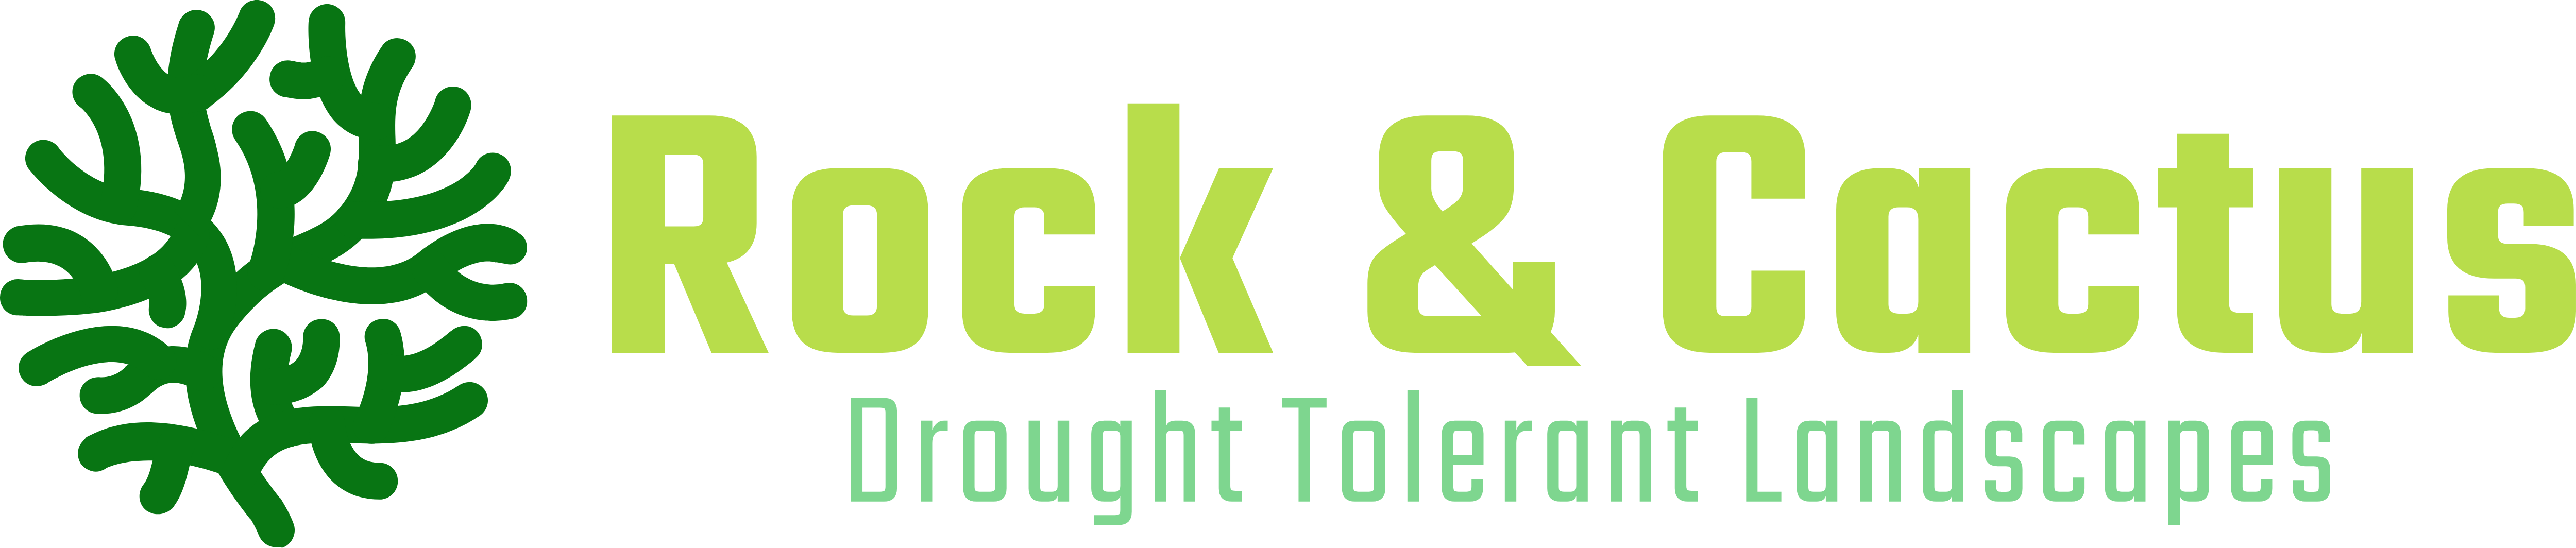 Rocks and Cactus-Unlicensed Contractor Logo